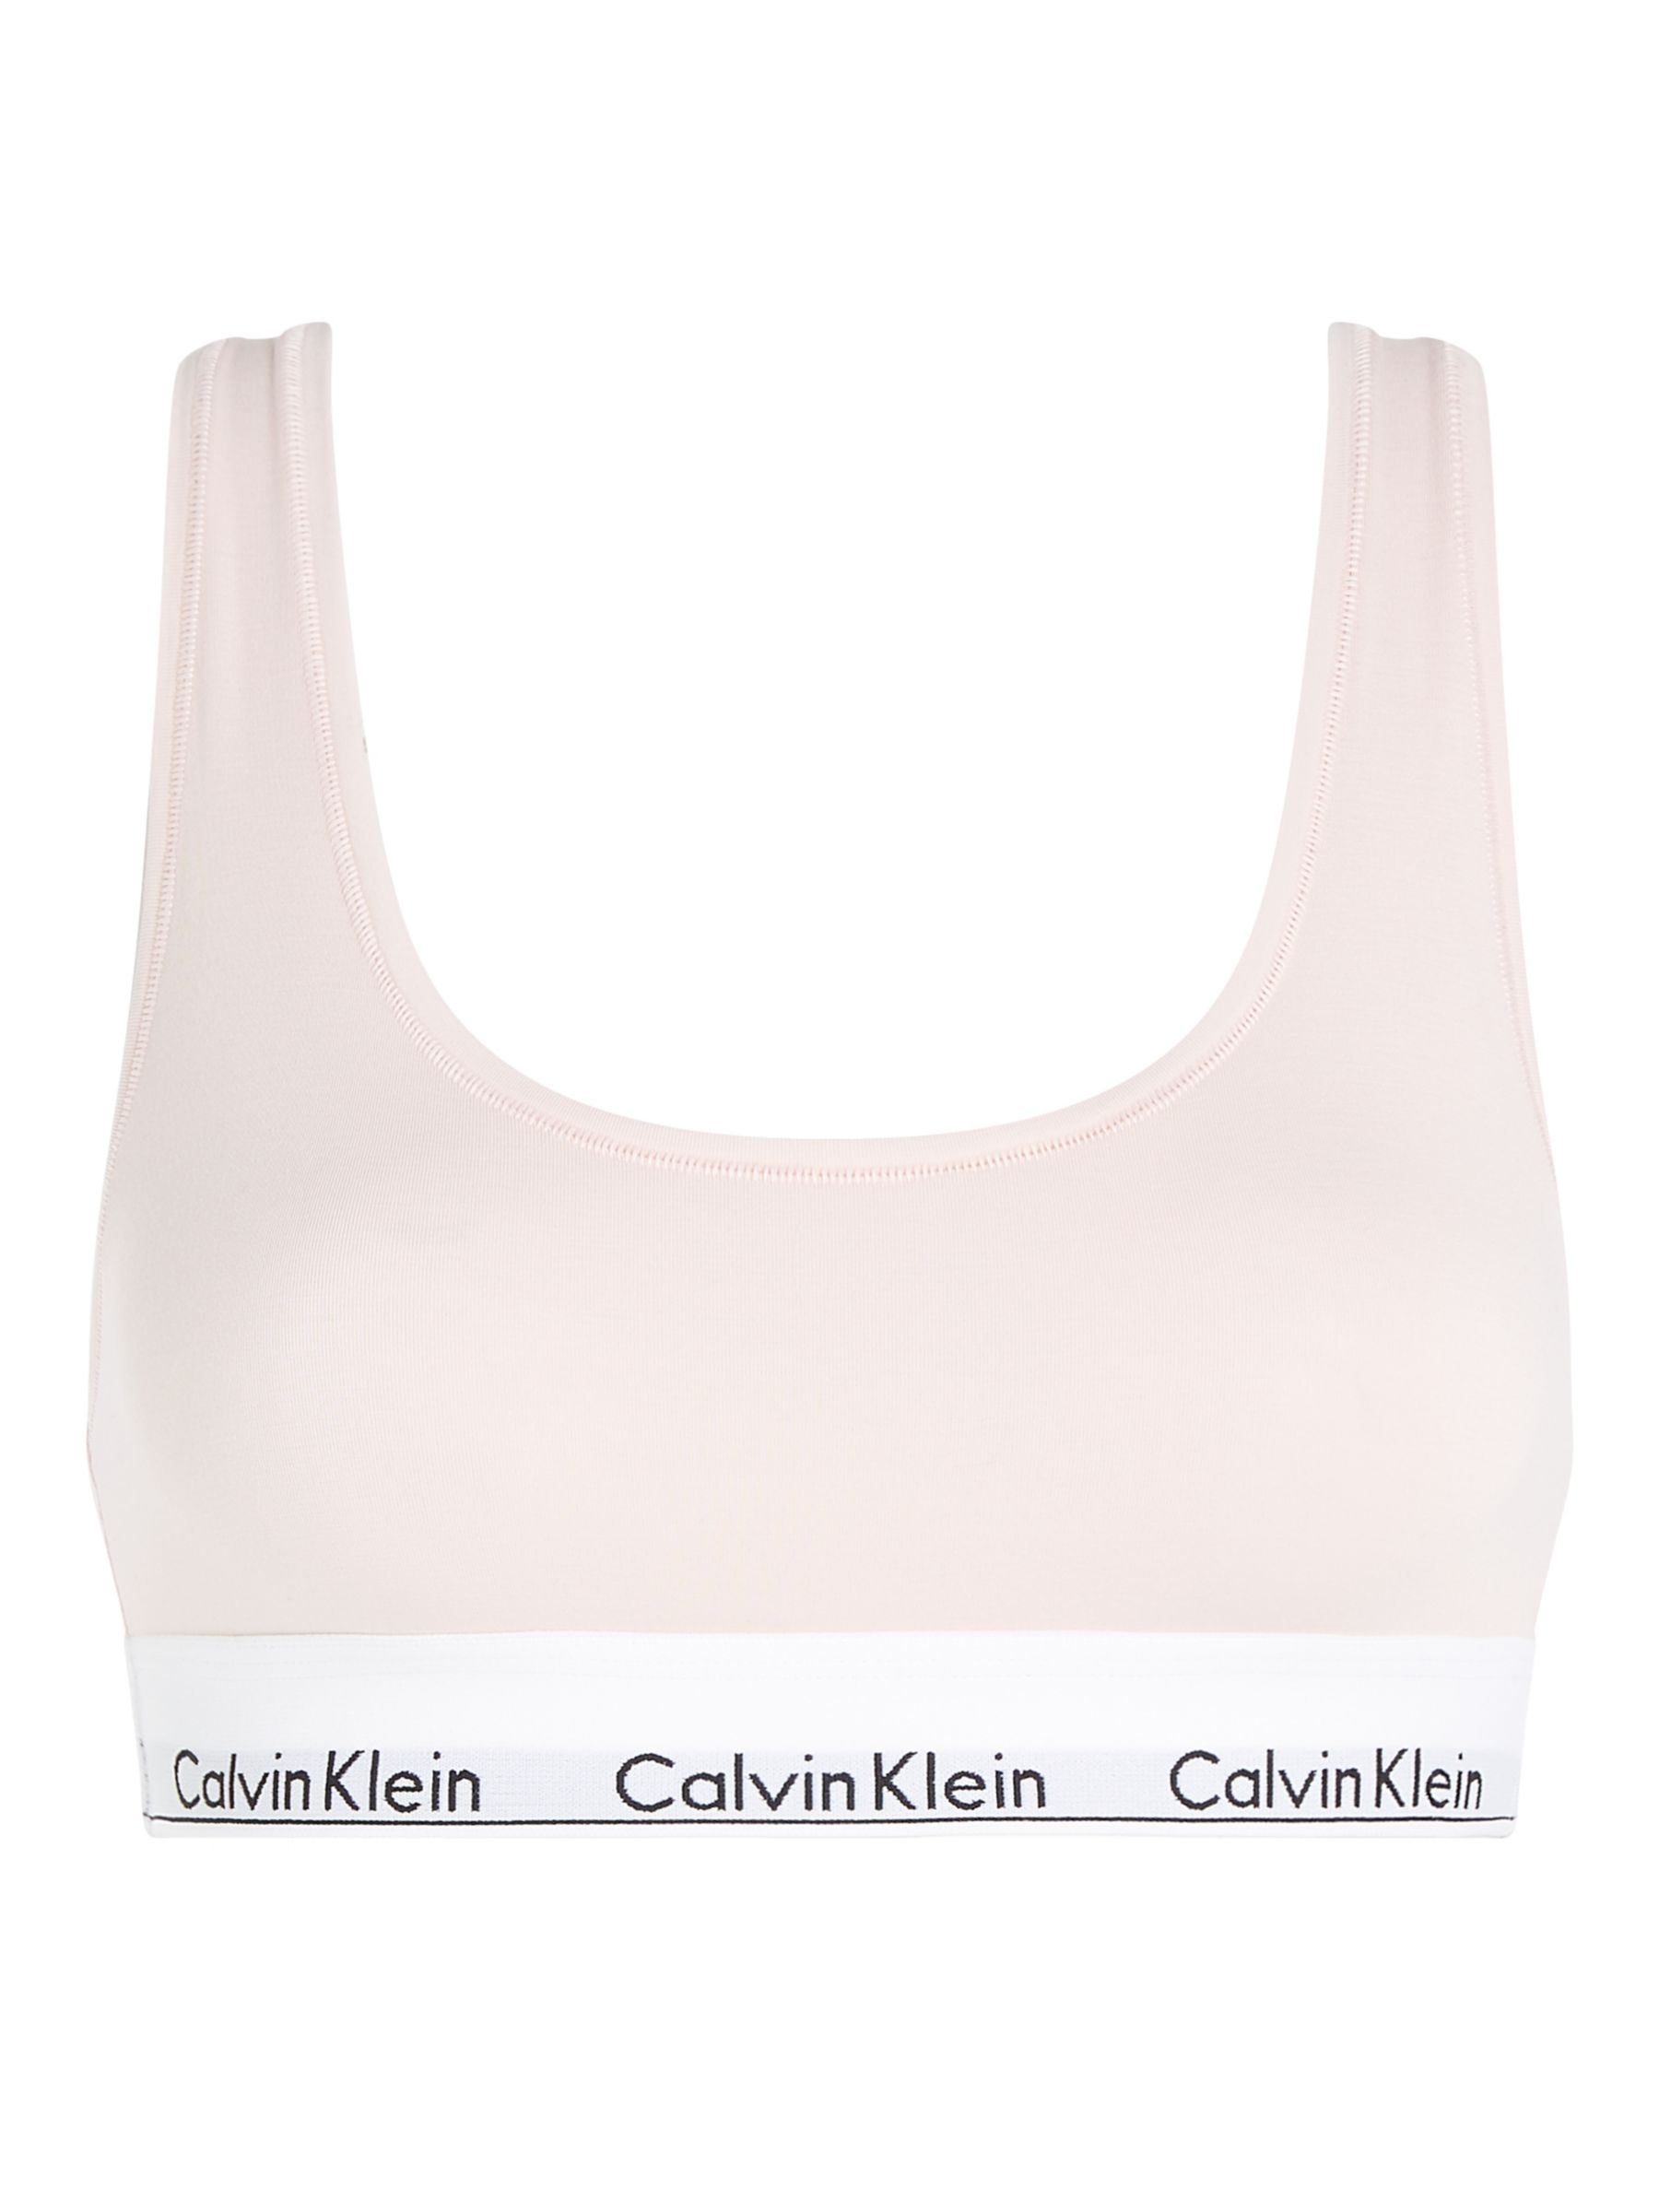 Calvin Klein Modern Cotton LL Bralette, Nymphs Thigh, XS-XL - Bras